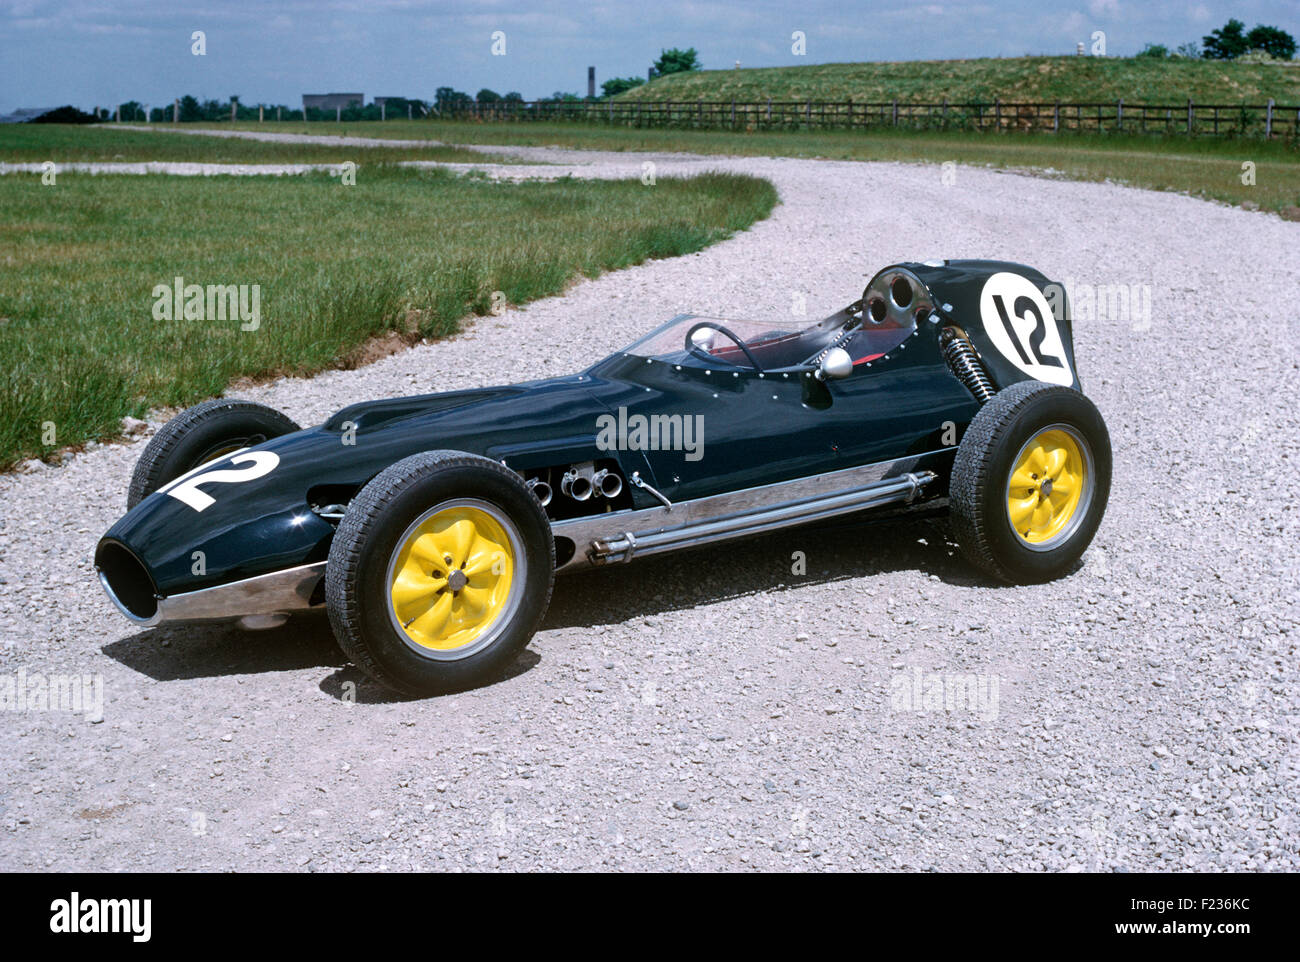 Foto SALONE DI DONINGTON COLLECTION 1958-59 Lotus-Climax Tipo 16 Foto Stock